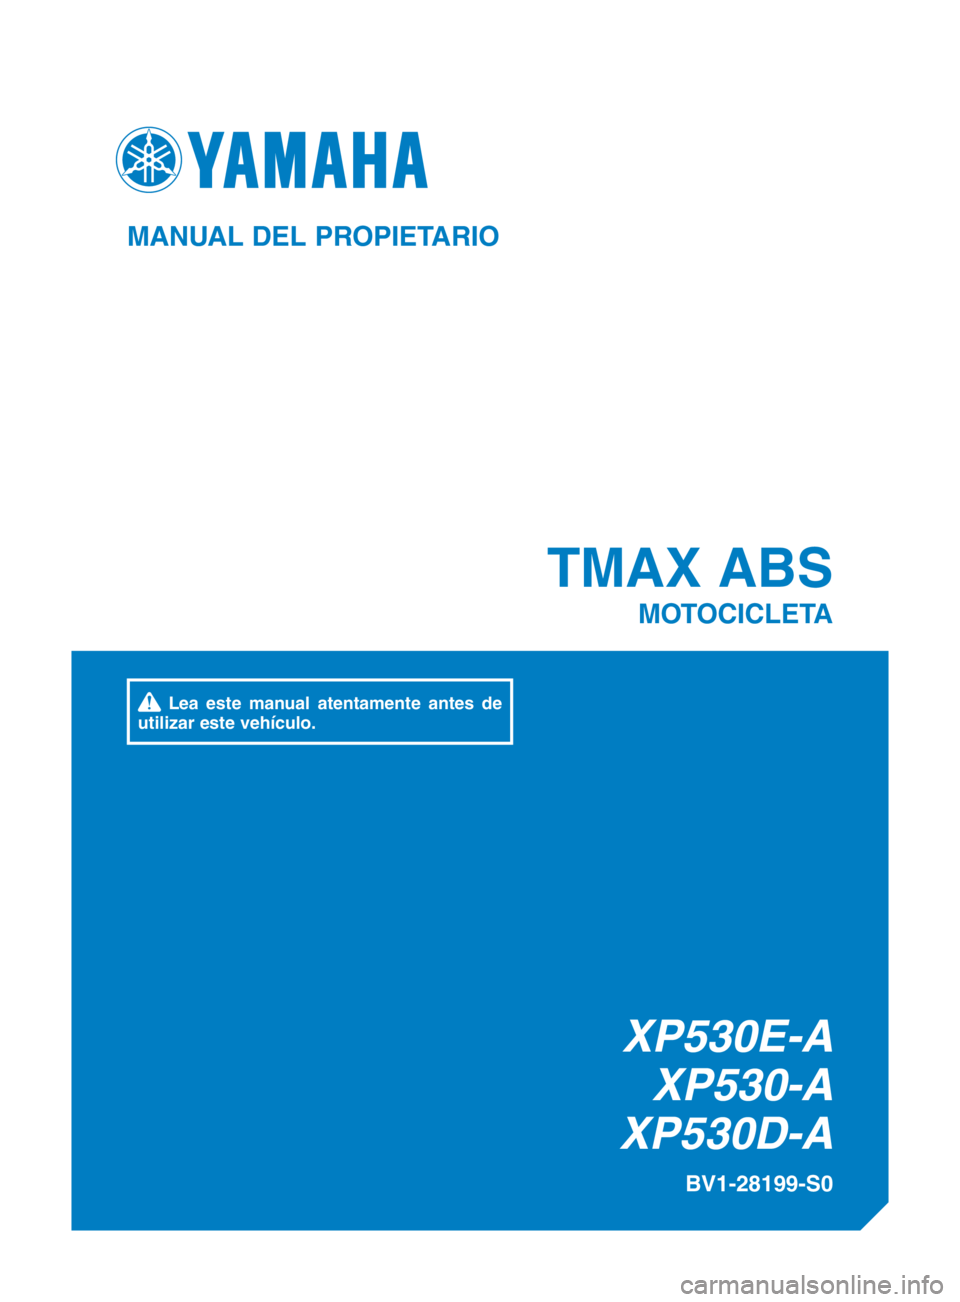 YAMAHA TMAX 2017  Manuale de Empleo (in Spanish) XP530E-AXP530-A
XP530D-A
TMAX ABS
MOTOCICLETA
BV1-28199-S0
MANUAL DEL PROPIETARIO
 Lea este manual atentamente antes de 
utilizar este vehículo.
BV1-9-S0_EUR-S_cover_vertical.indd   12016/12/15   9:3